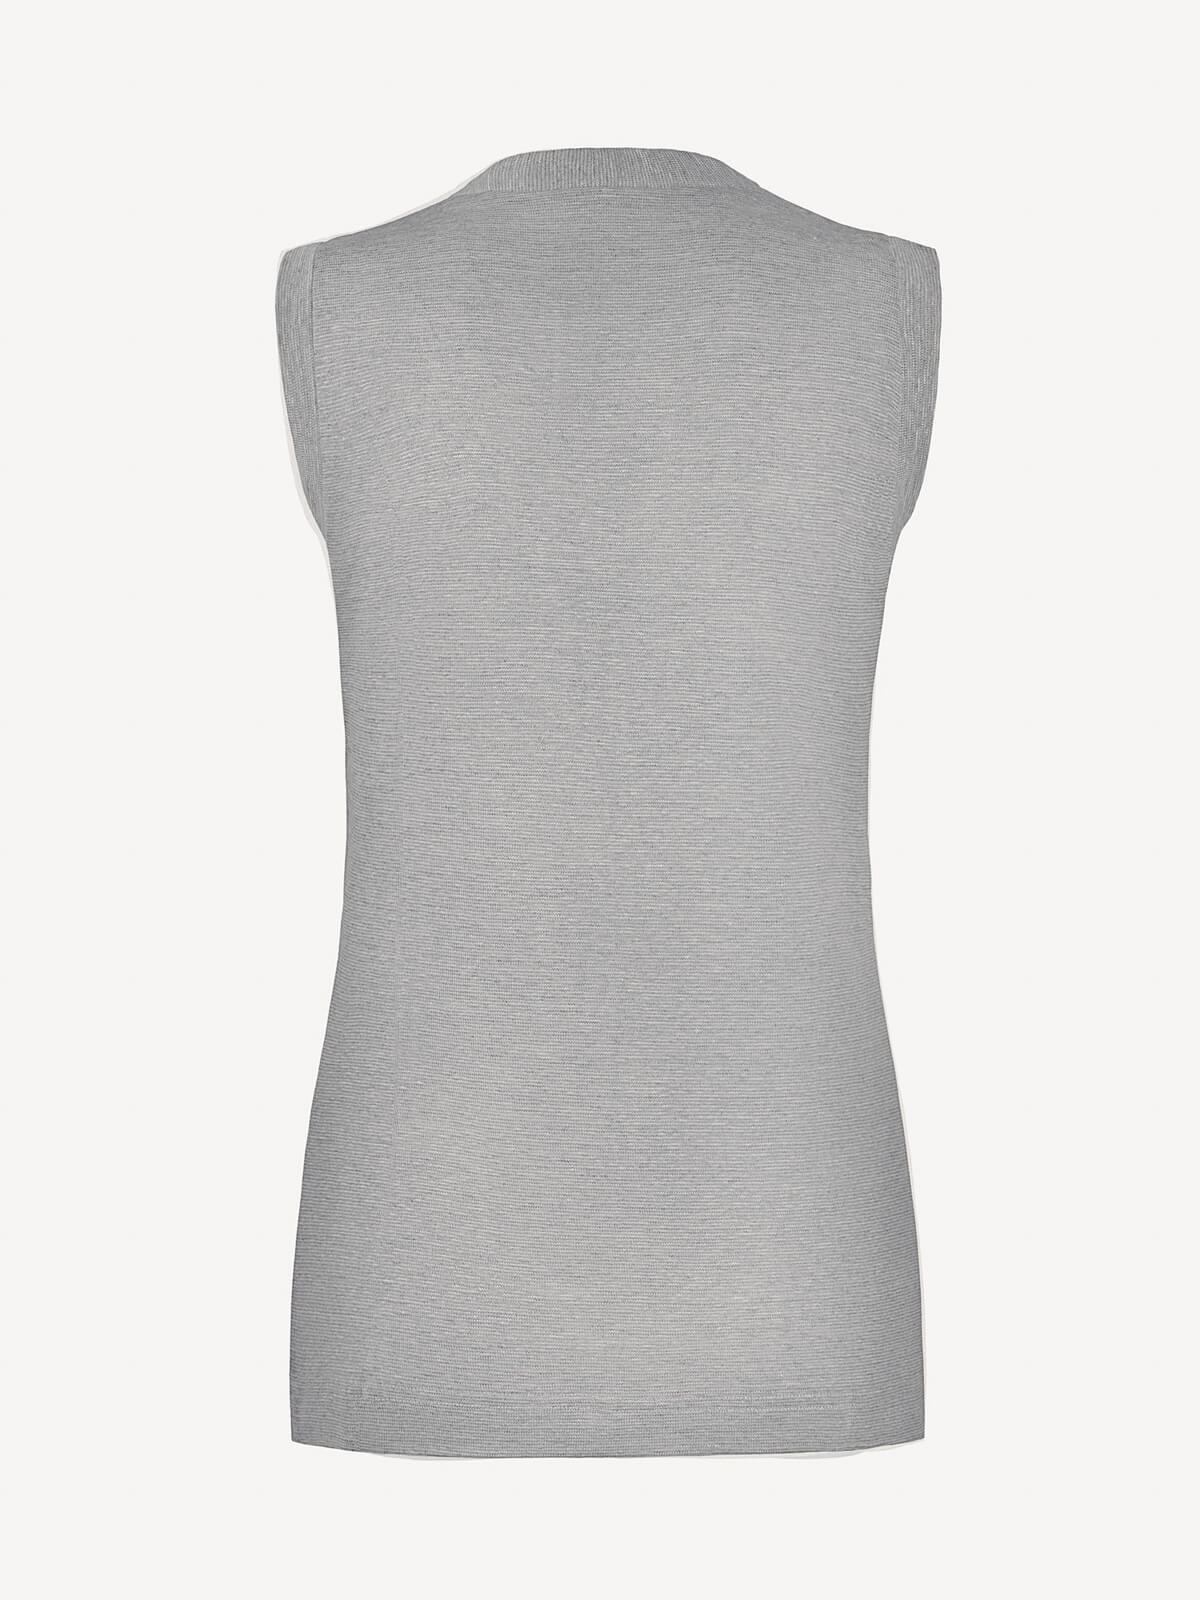 Top V for woman 100% Capri linen light grey top back 